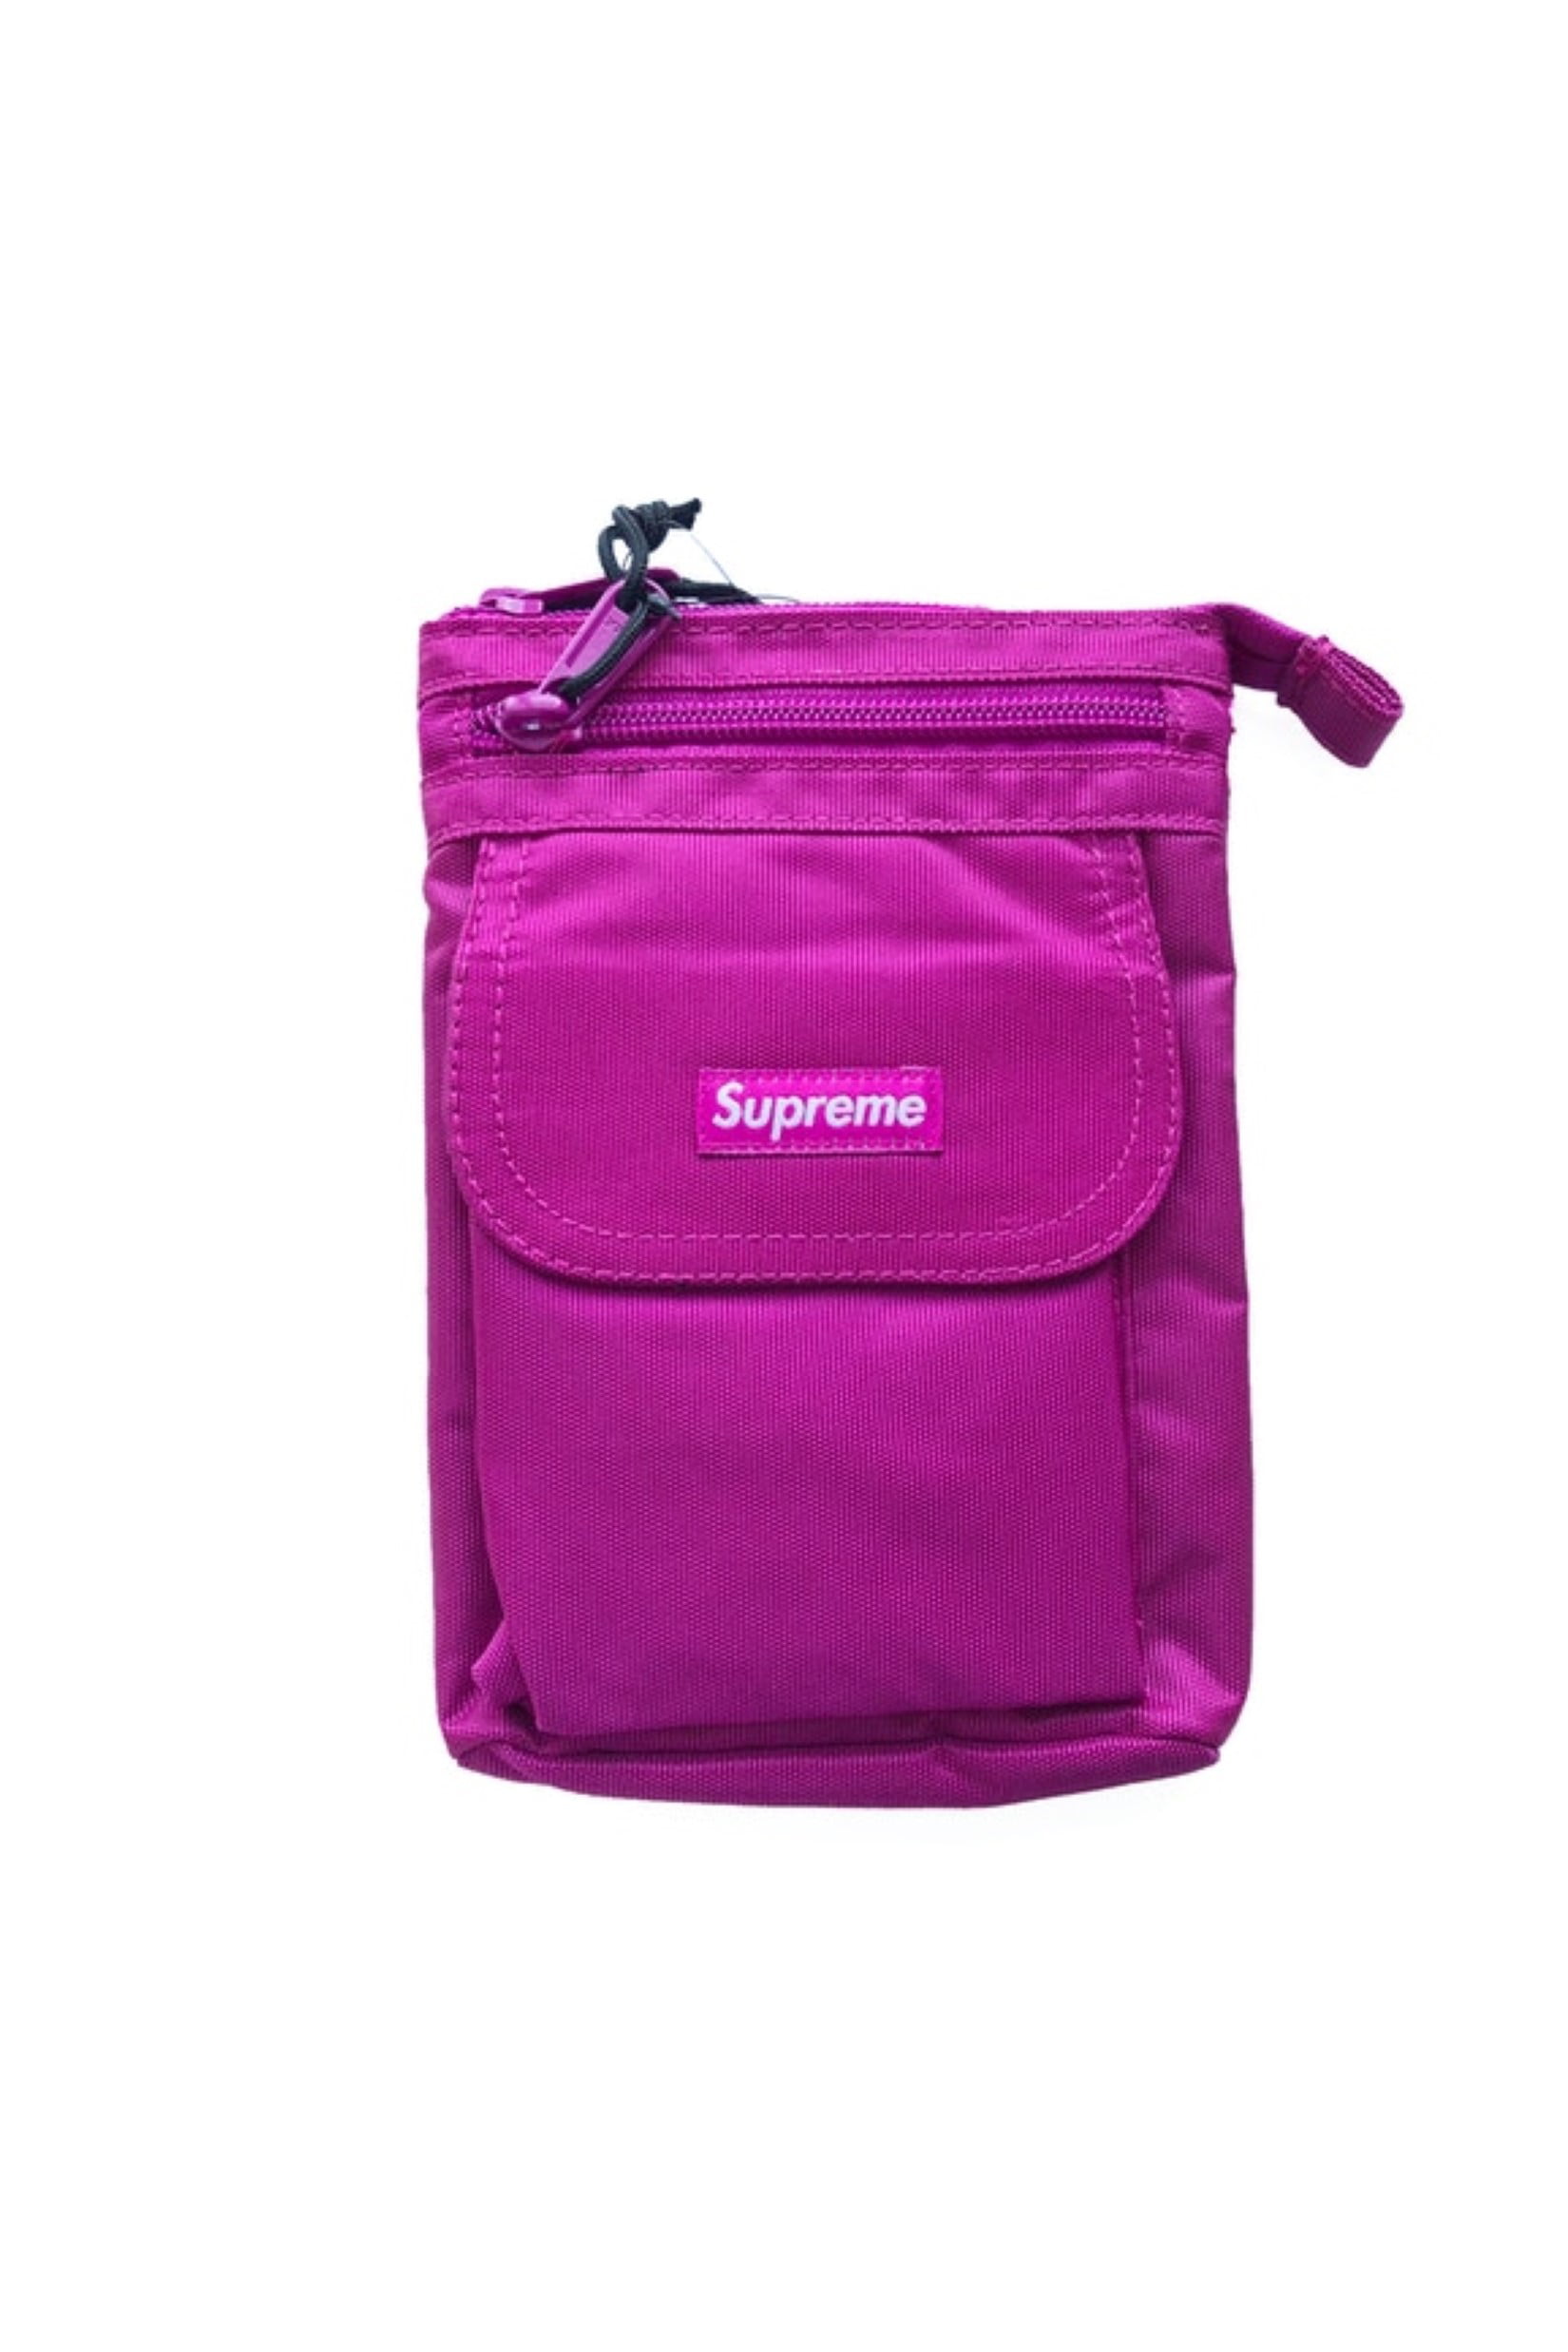 Supreme - Supreme Shoulder Bag (FW19) Magenta - Walmart.com - Walmart.com